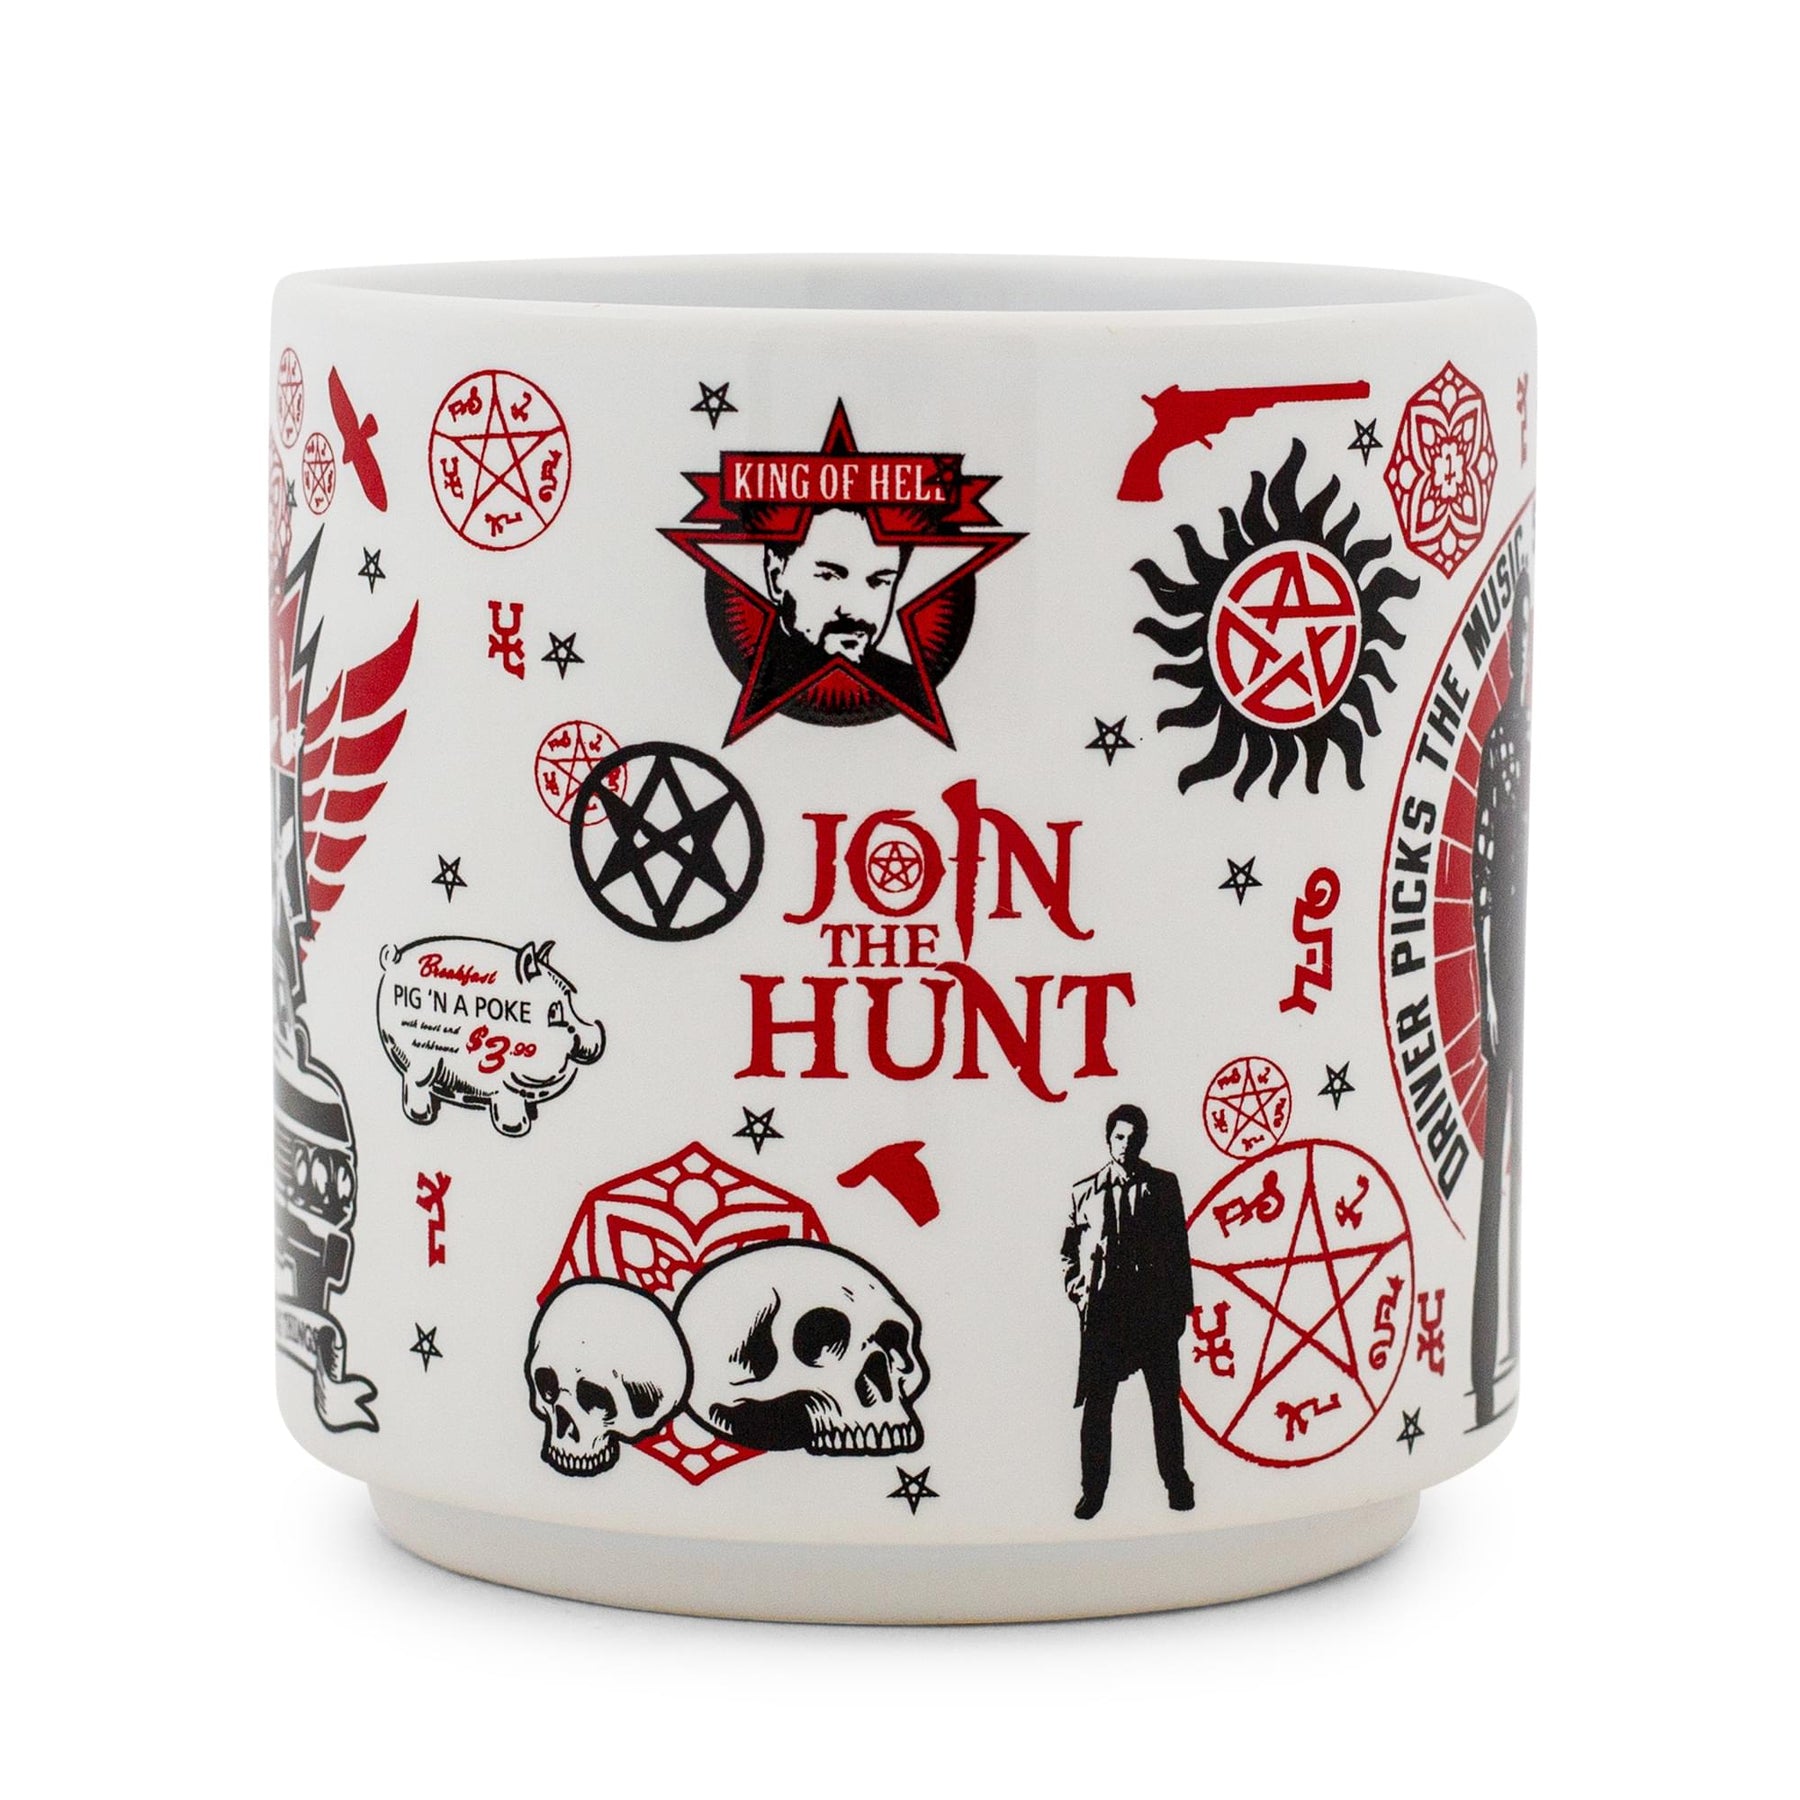 Supernatural "Join The Hunt" Single Stackable Ceramic Mug | Holds 13 Ounces